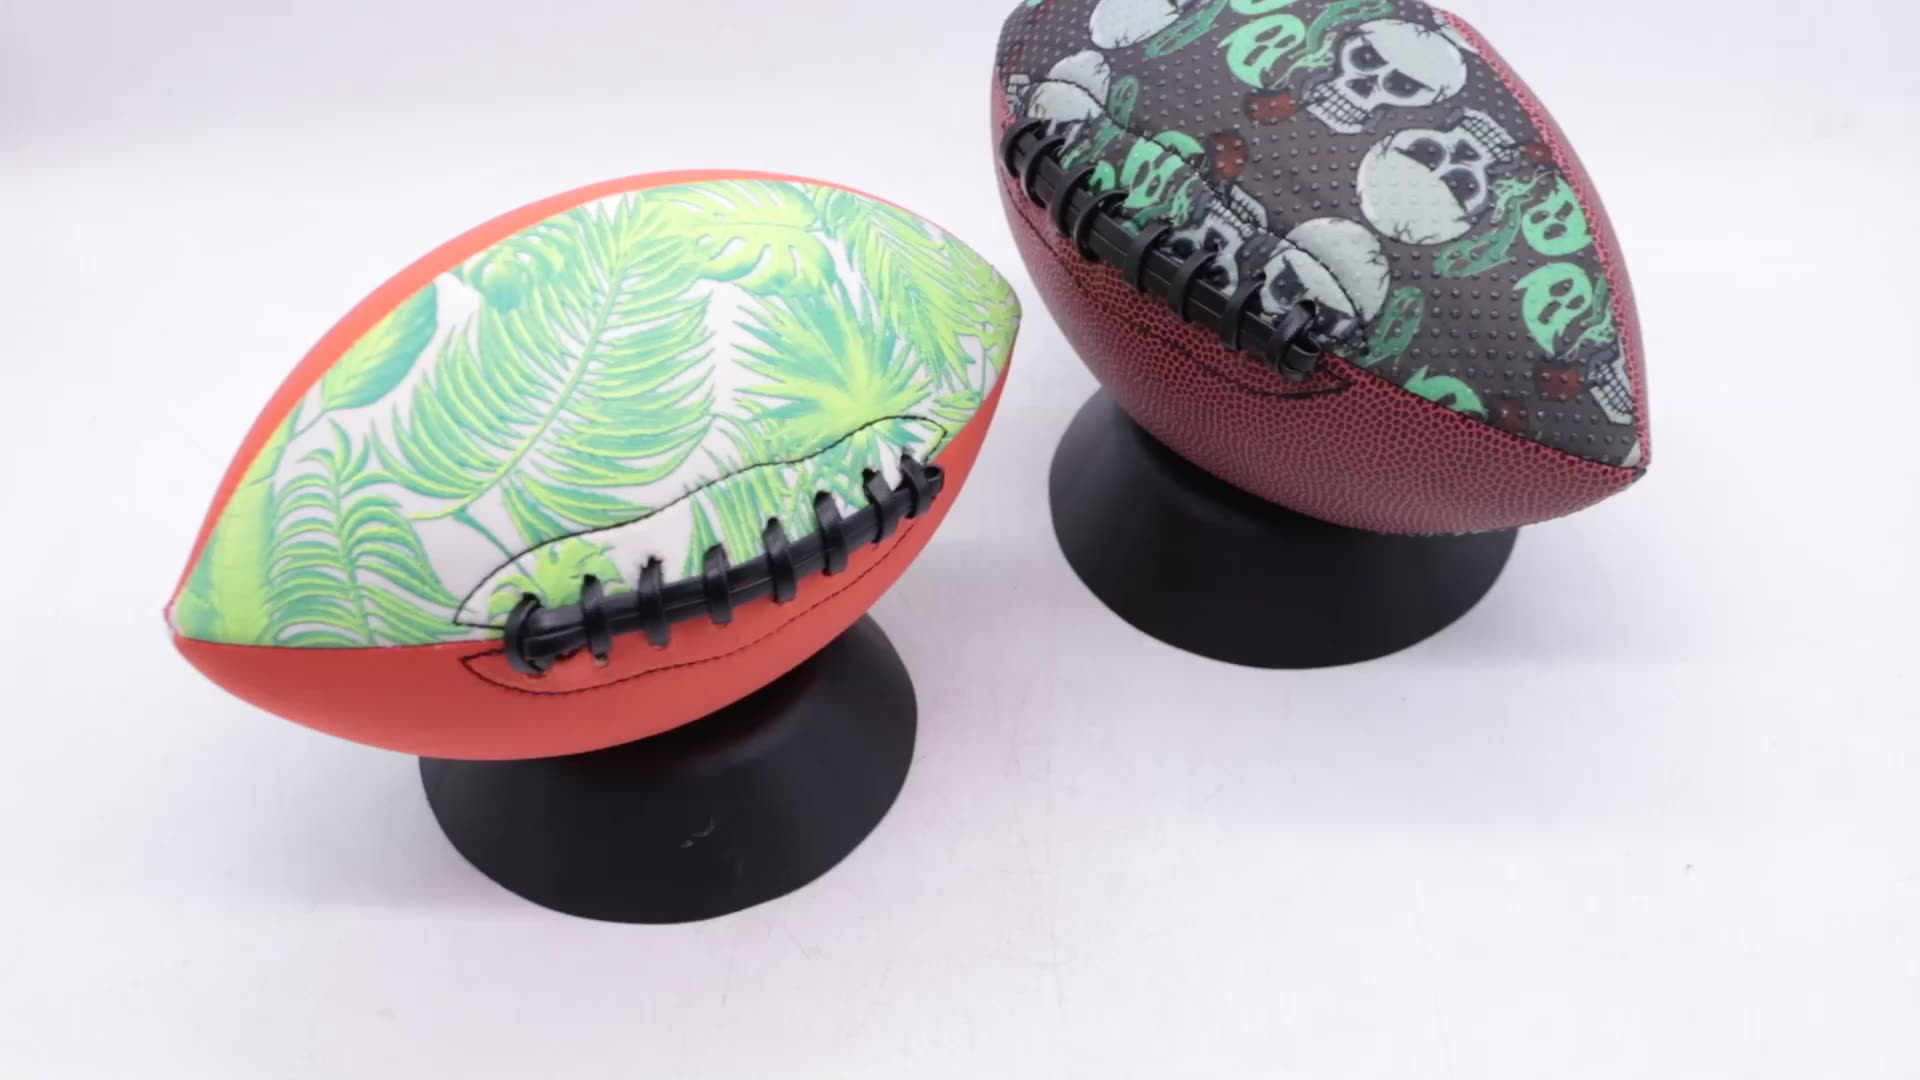 Custom mini american football ball for high grip1